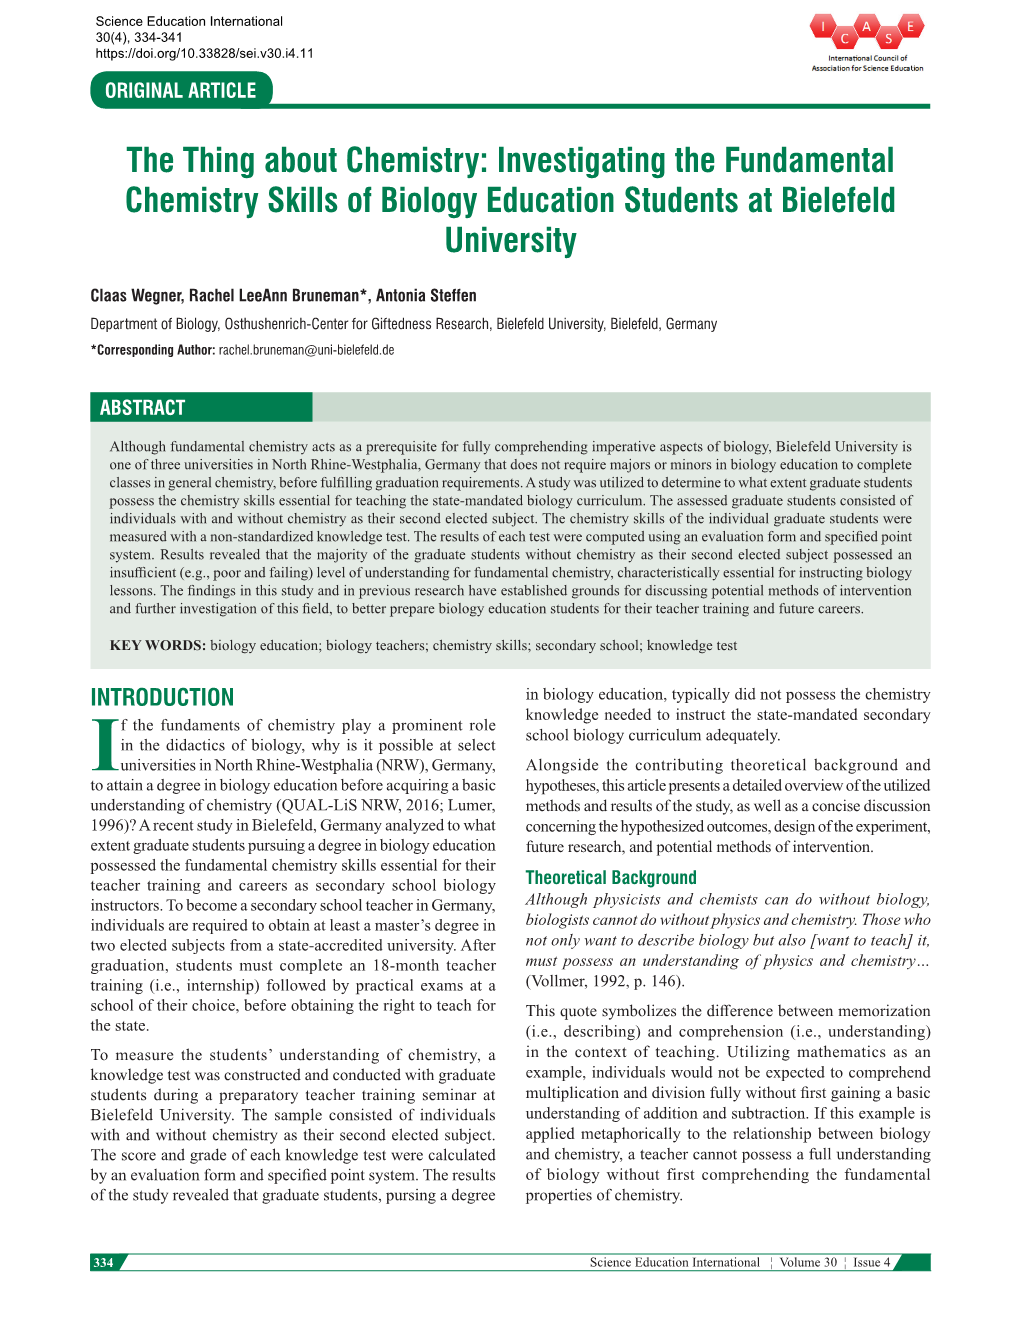 Investigating the Fundamental Chemistry Skills of Biology Education Students at Bielefeld University